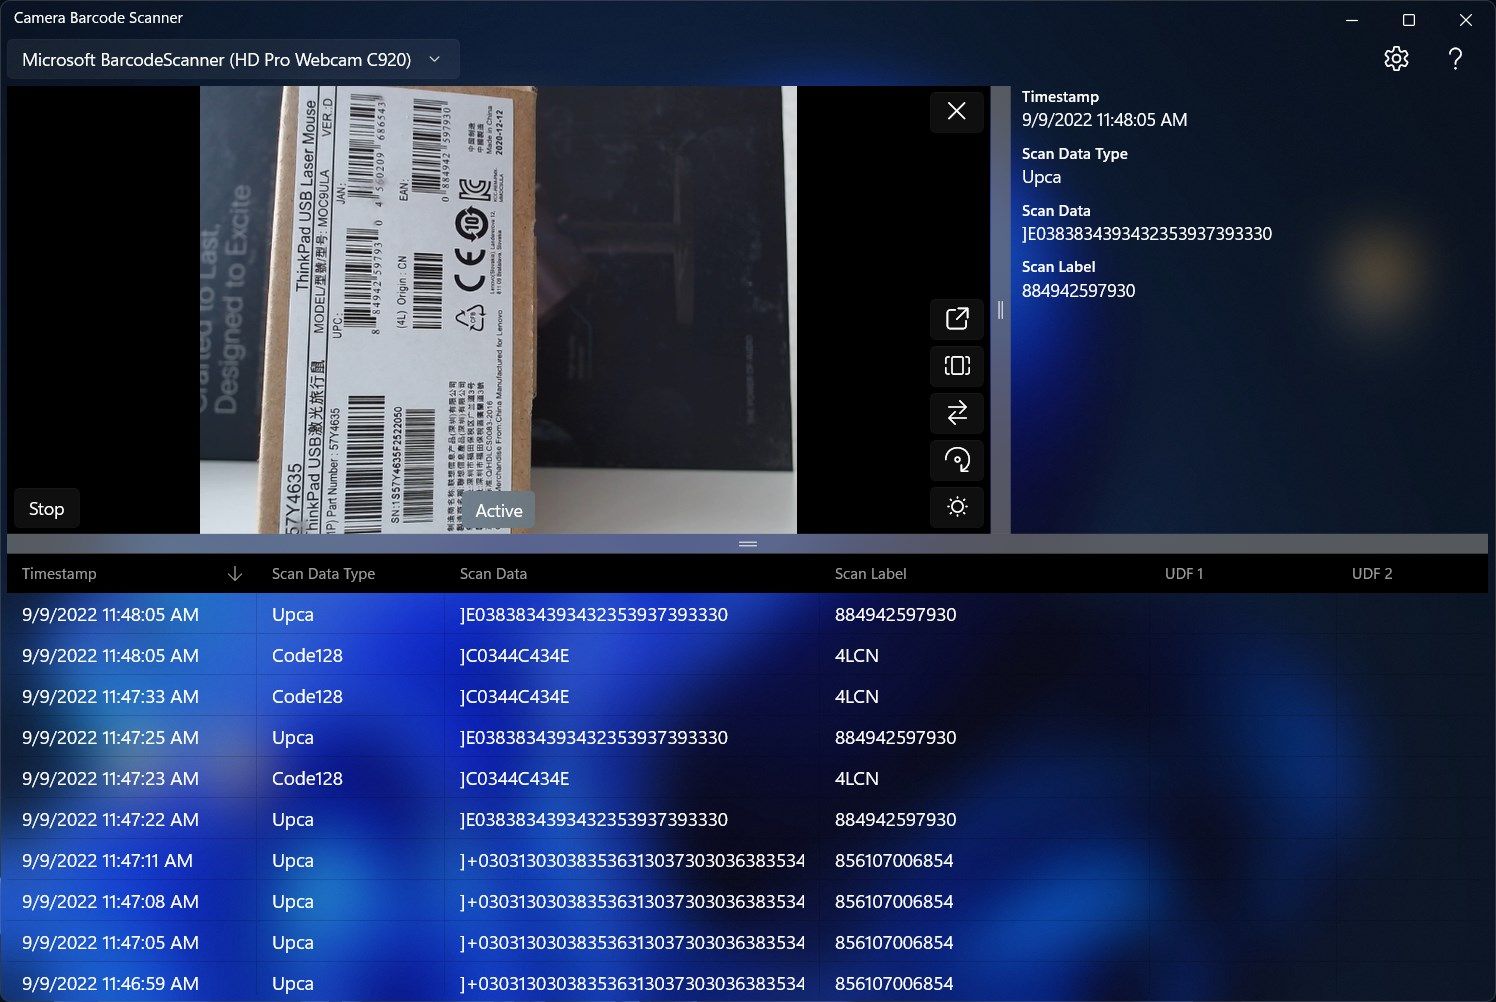 Camera Barcode Scanner